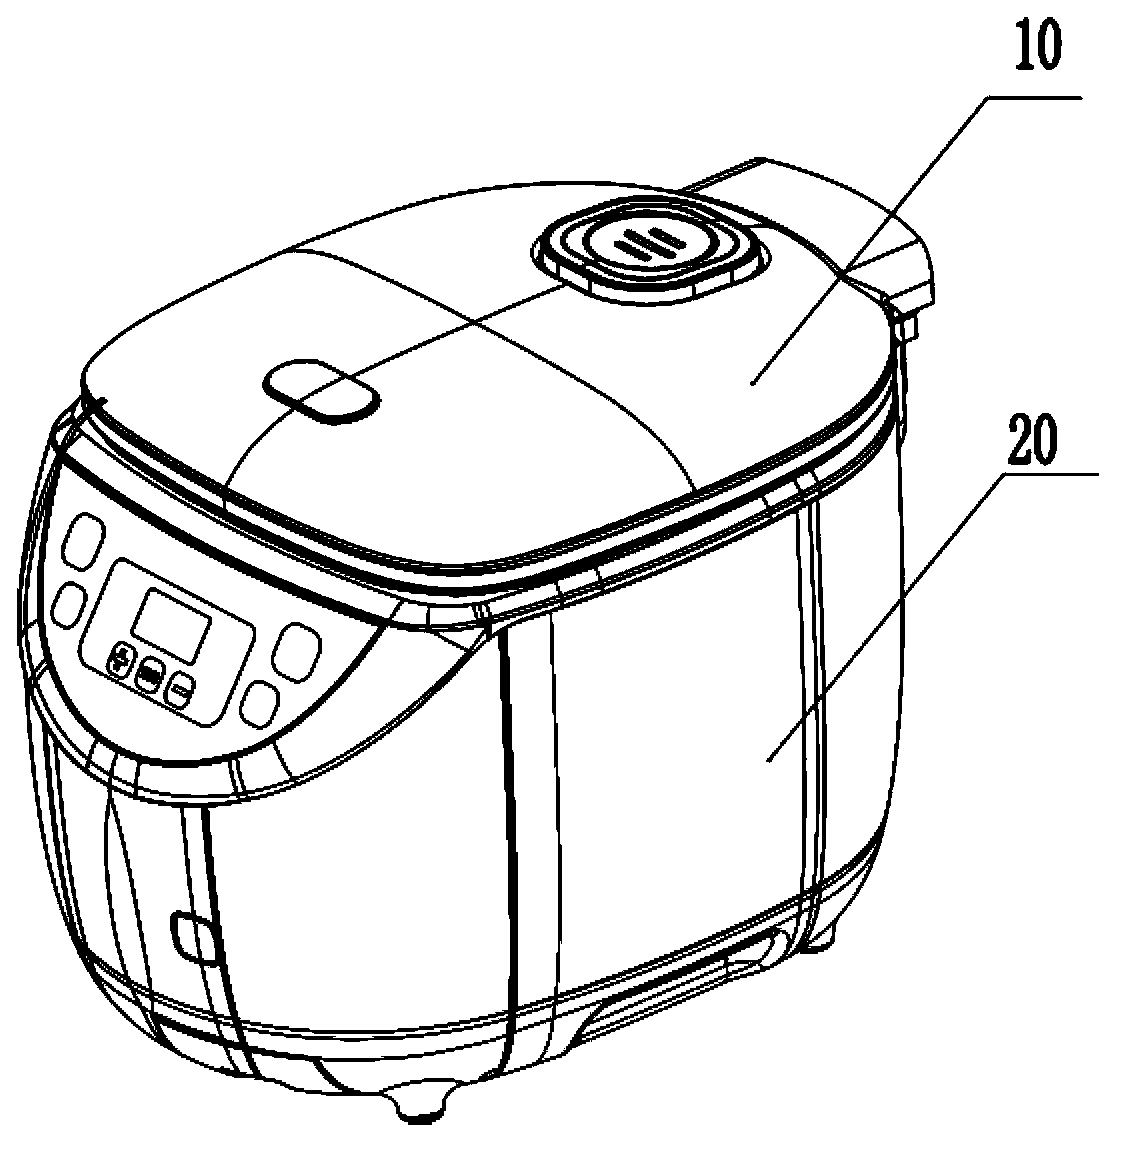 Full-automatic household steamed bun making machine